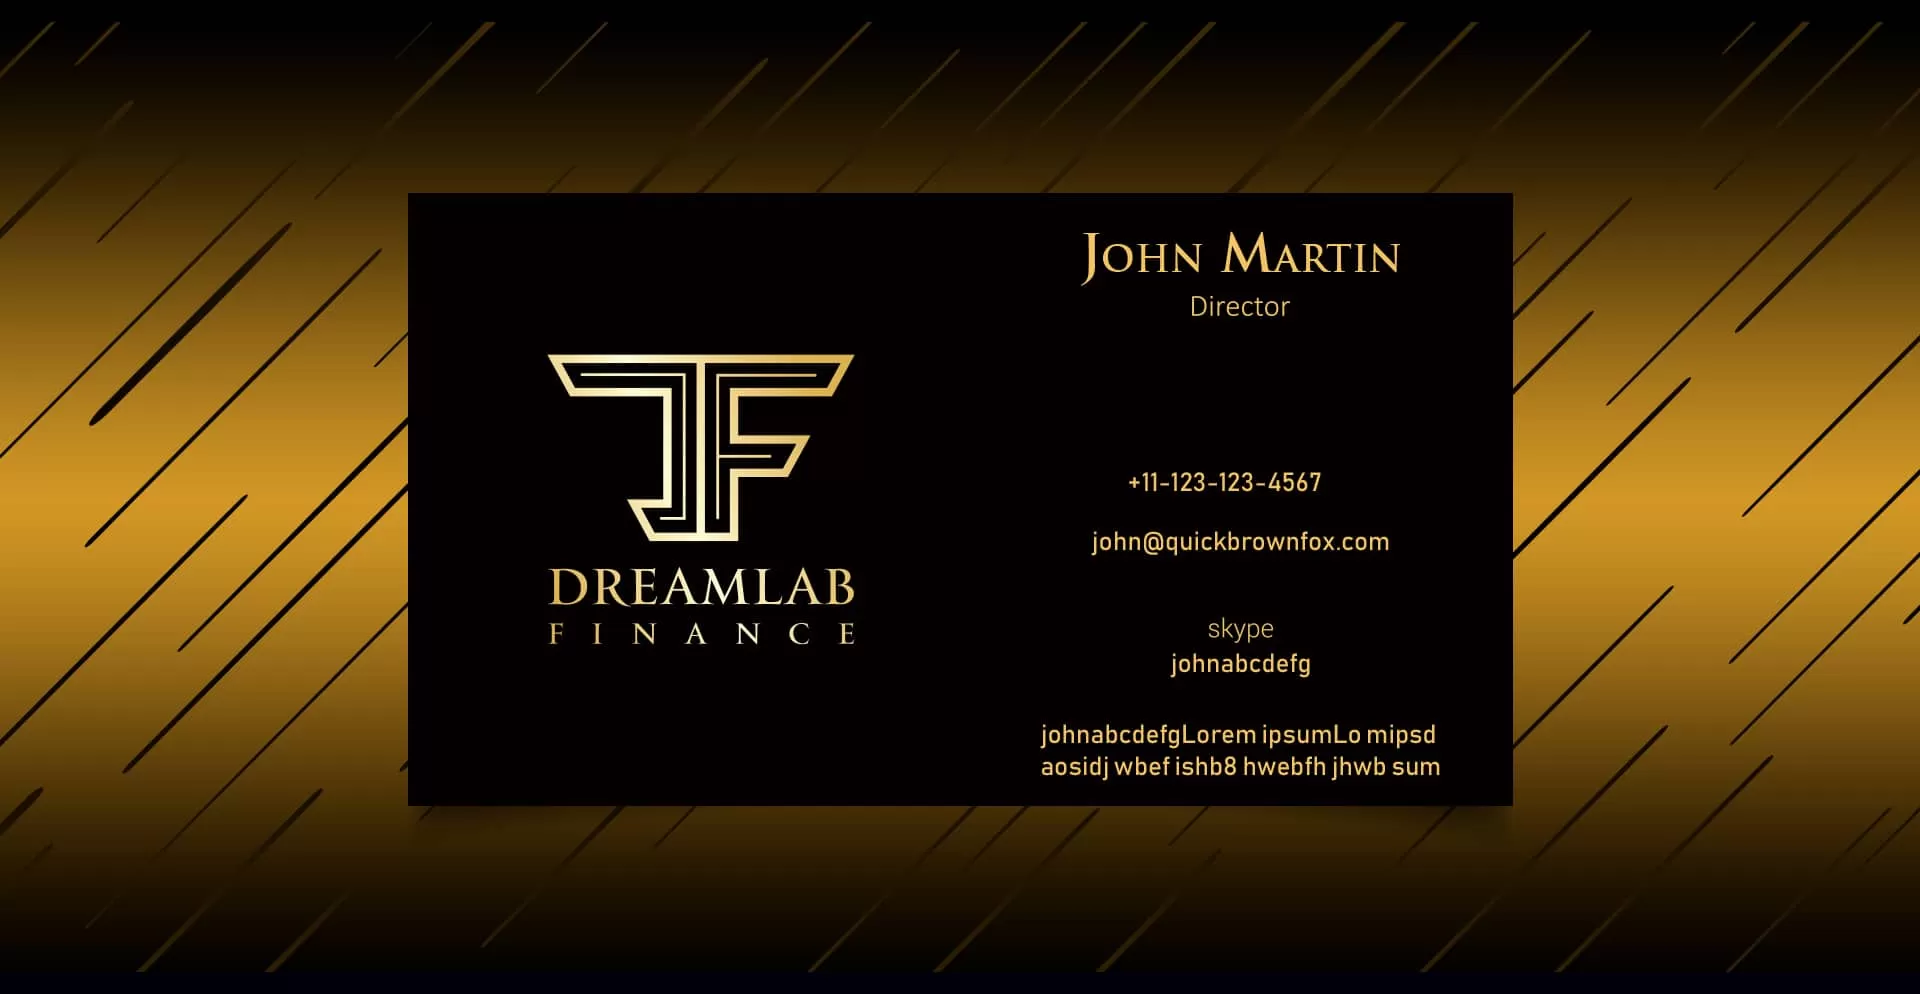 Dreamlab Finance Business Card